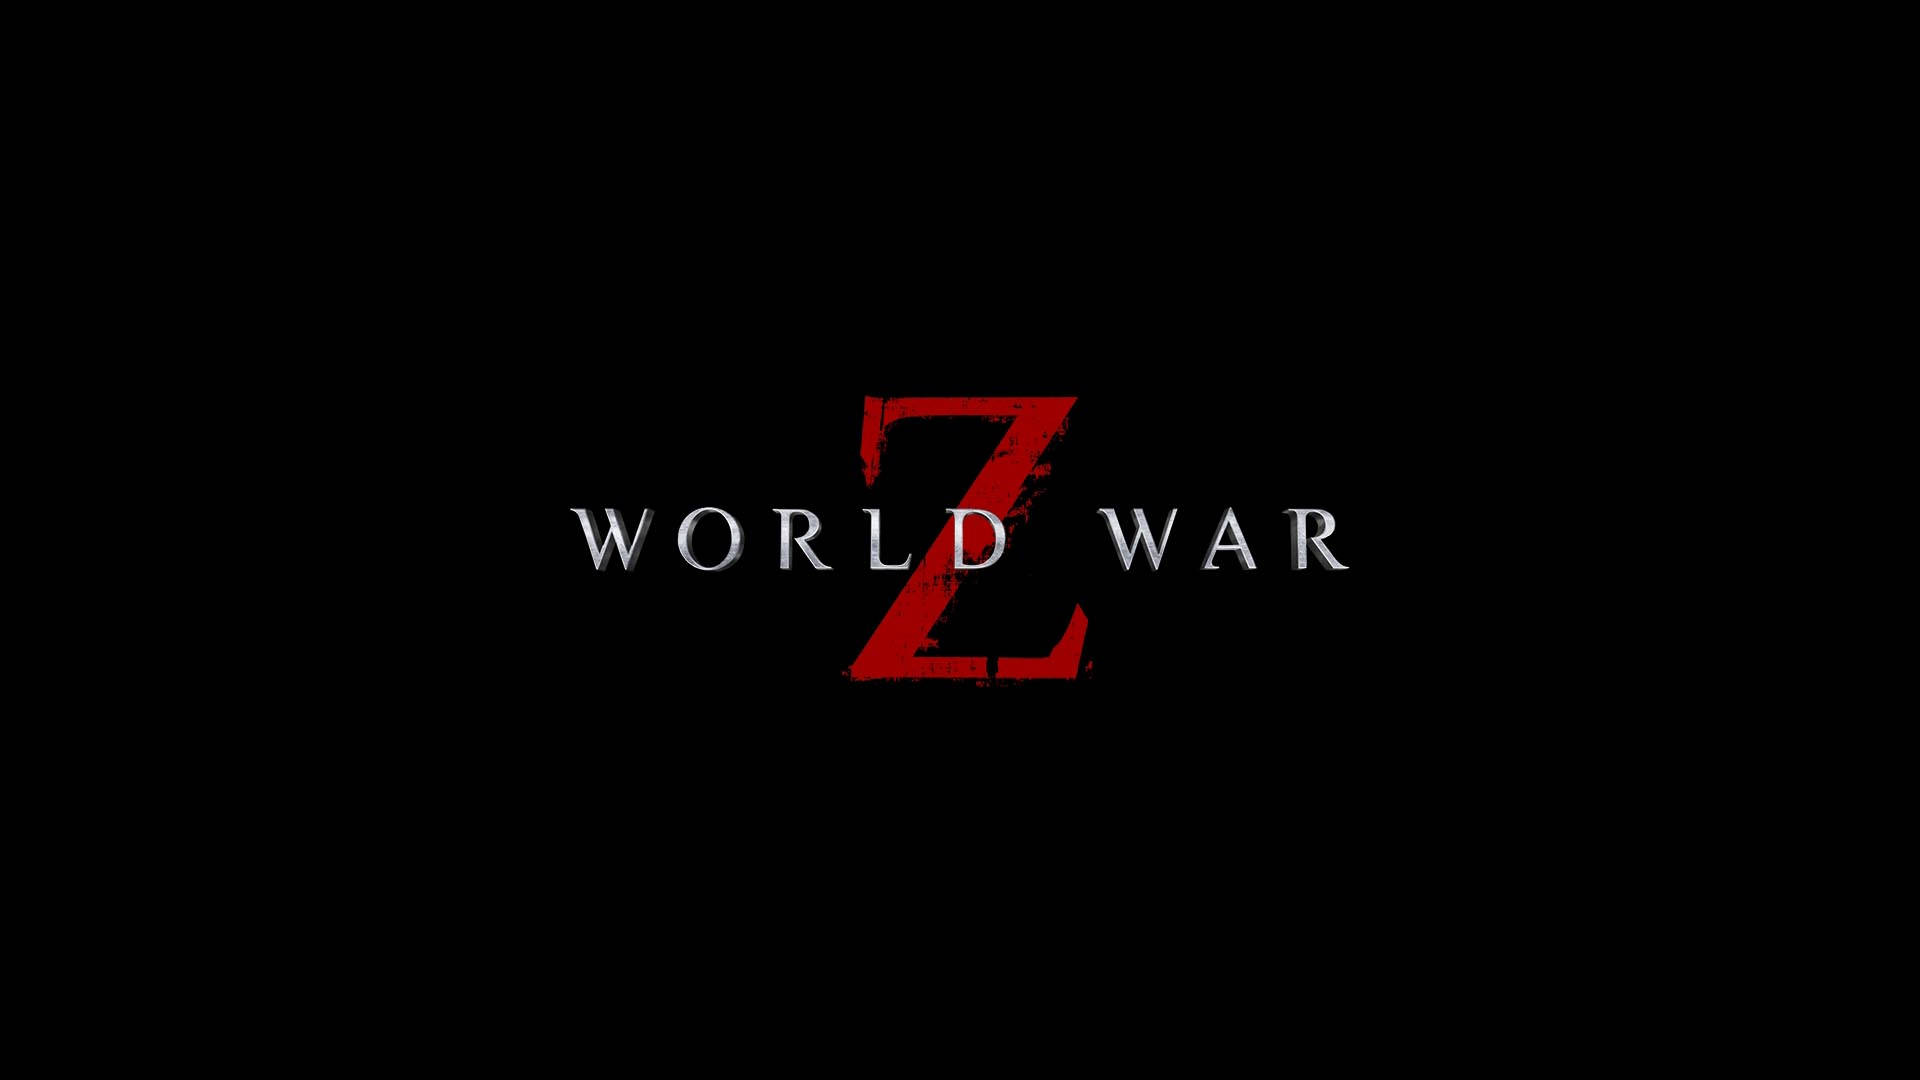 World War Z Simple Poster Background